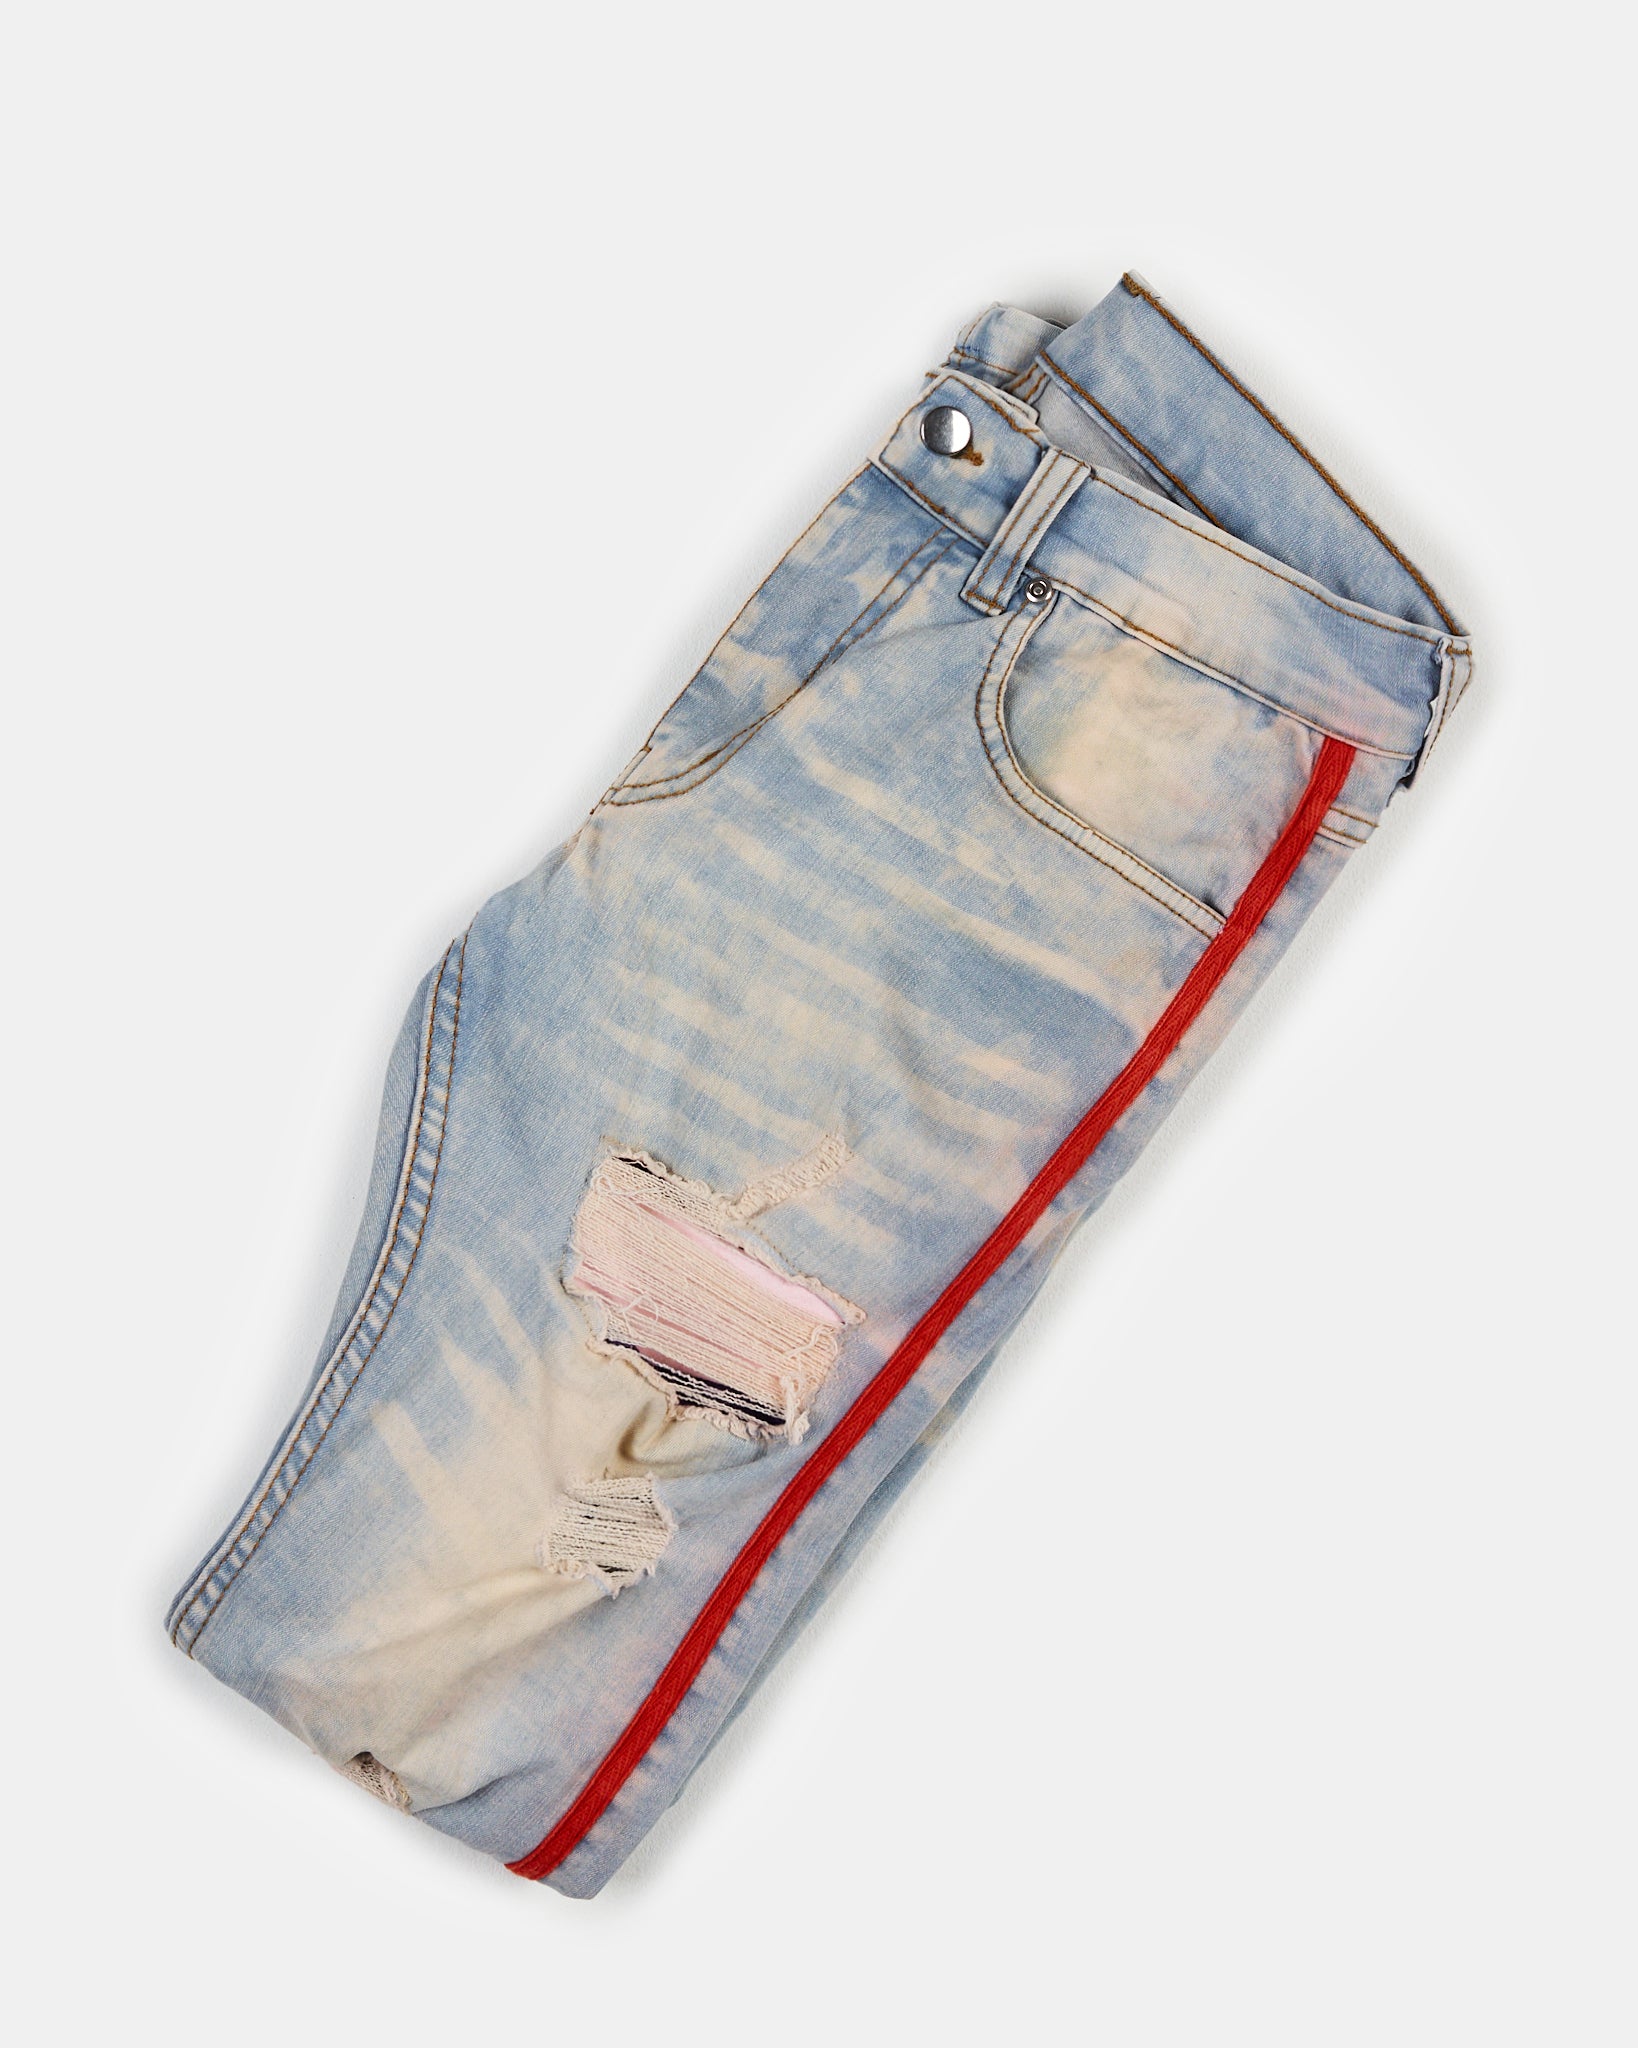 Villa Blvd Variety Cargo Denim Jeans ☛ Multiple Colors Available ☚